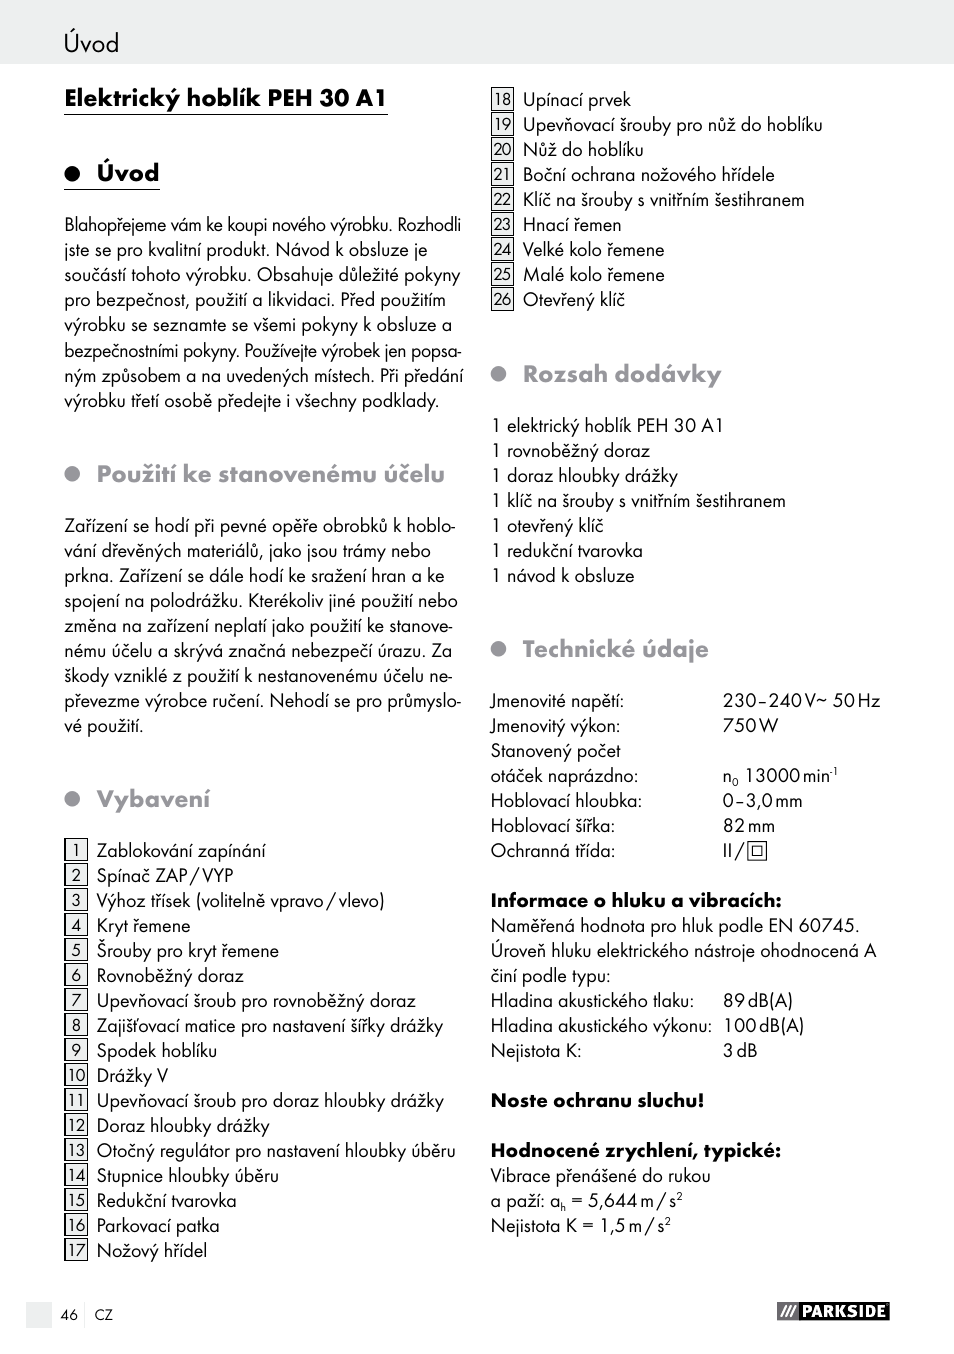 Elektrický hoblík peh 30 a1, Úvod, Použití ke stanovenému účelu | Parkside  PEH 30 A1 User Manual | Page 46 / 75 | Original mode